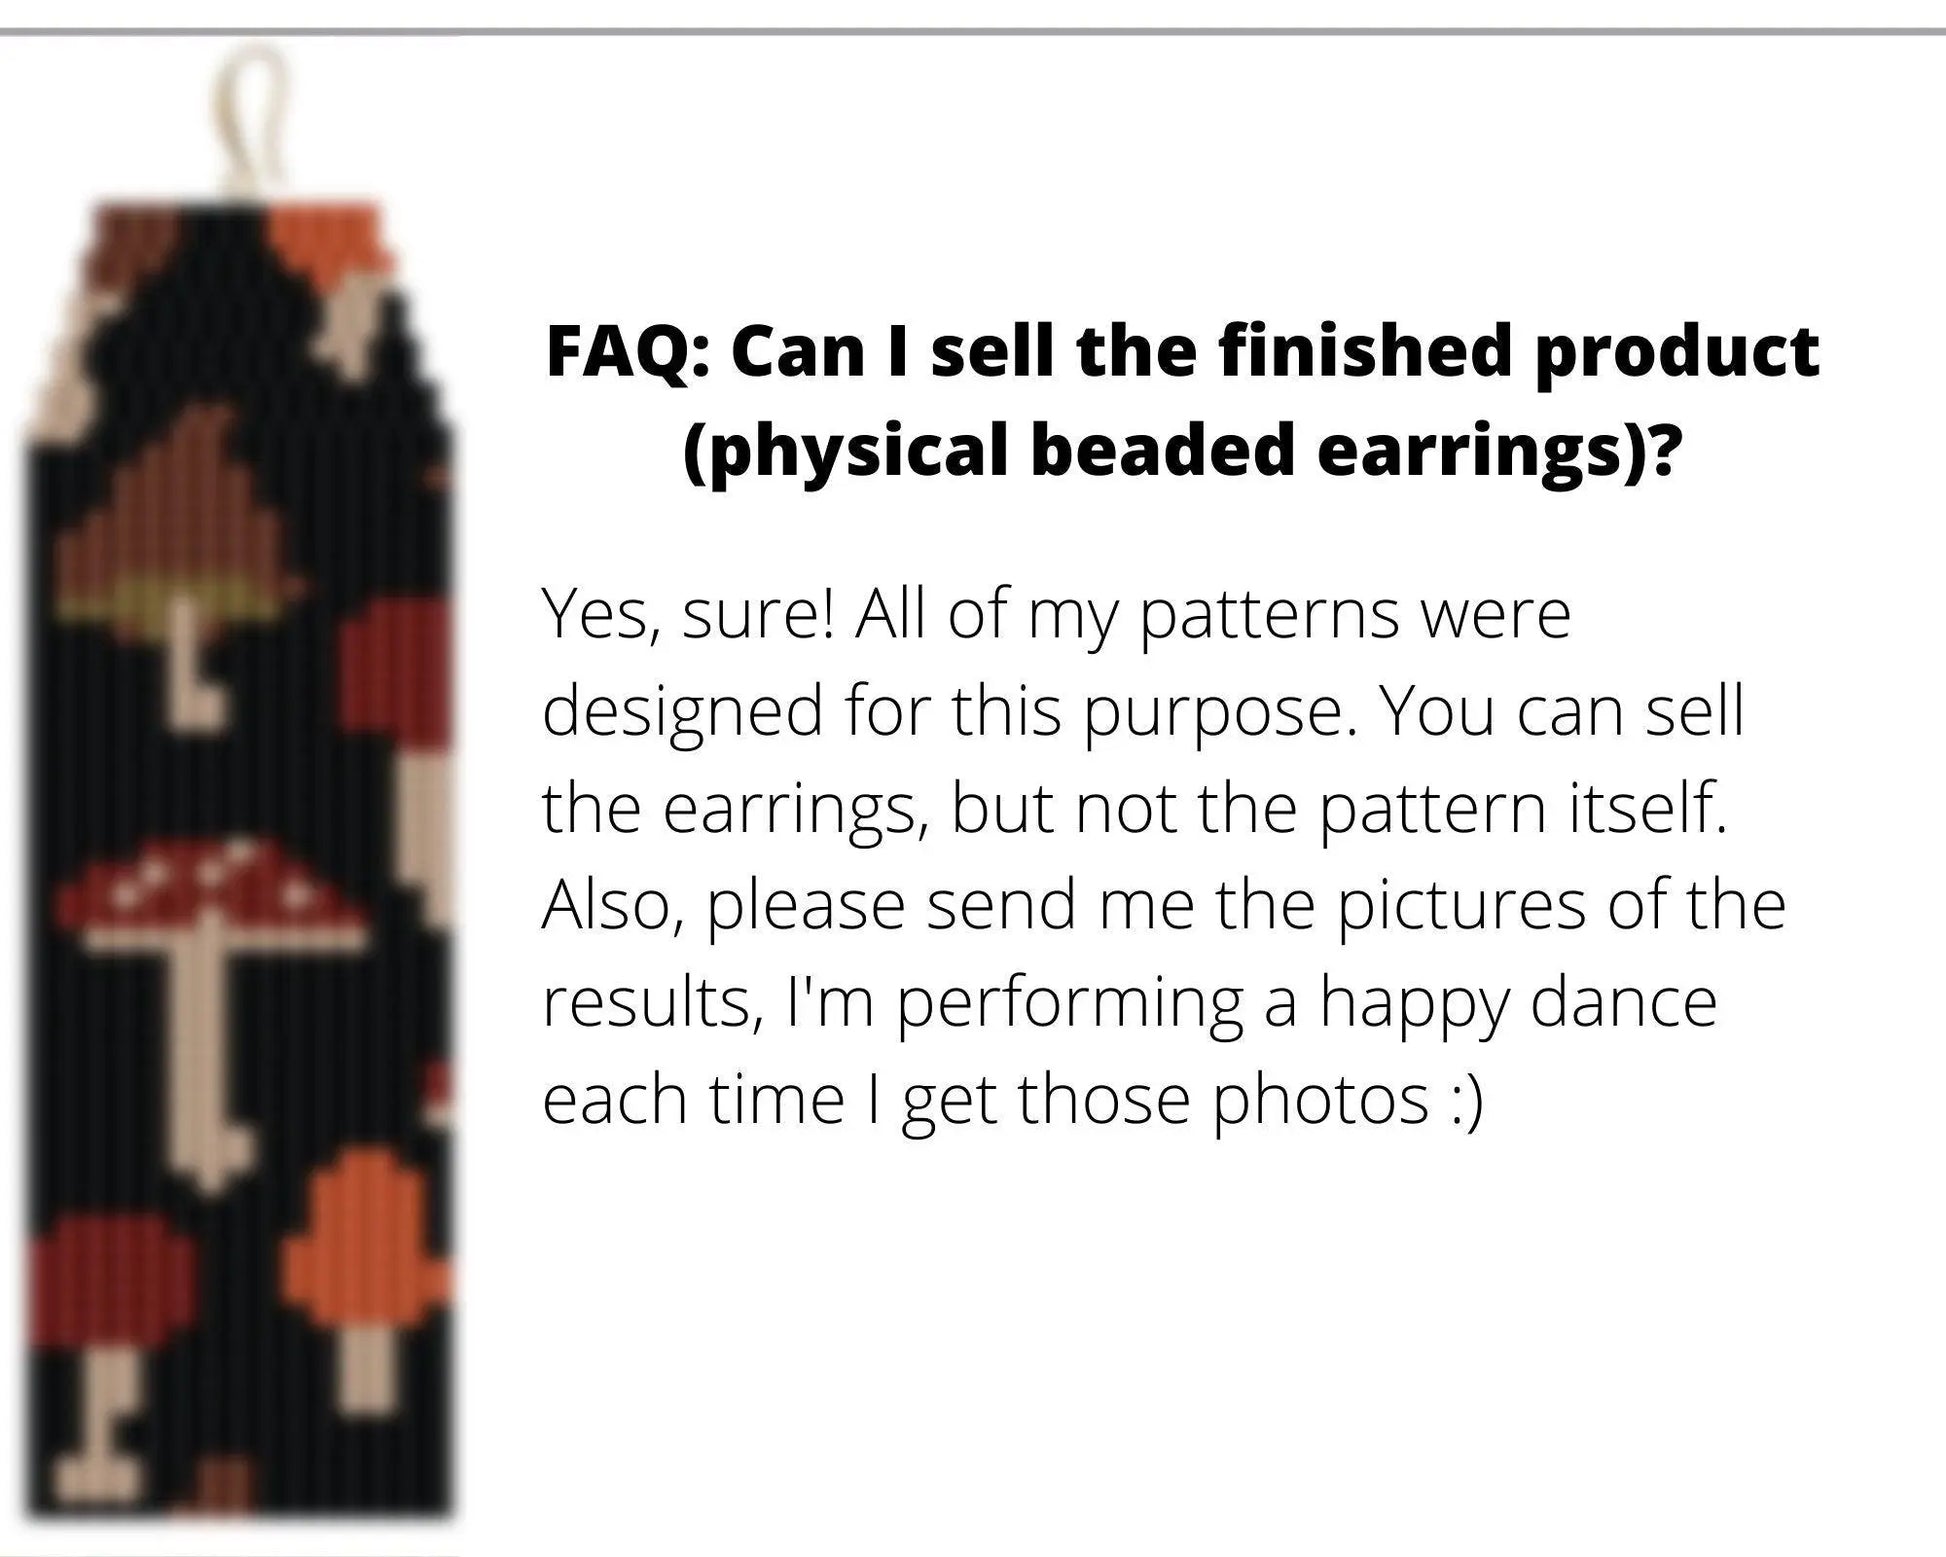 Mushroom Brick Stitch pattern for fringe beaded earrings - NikoBeadsUA